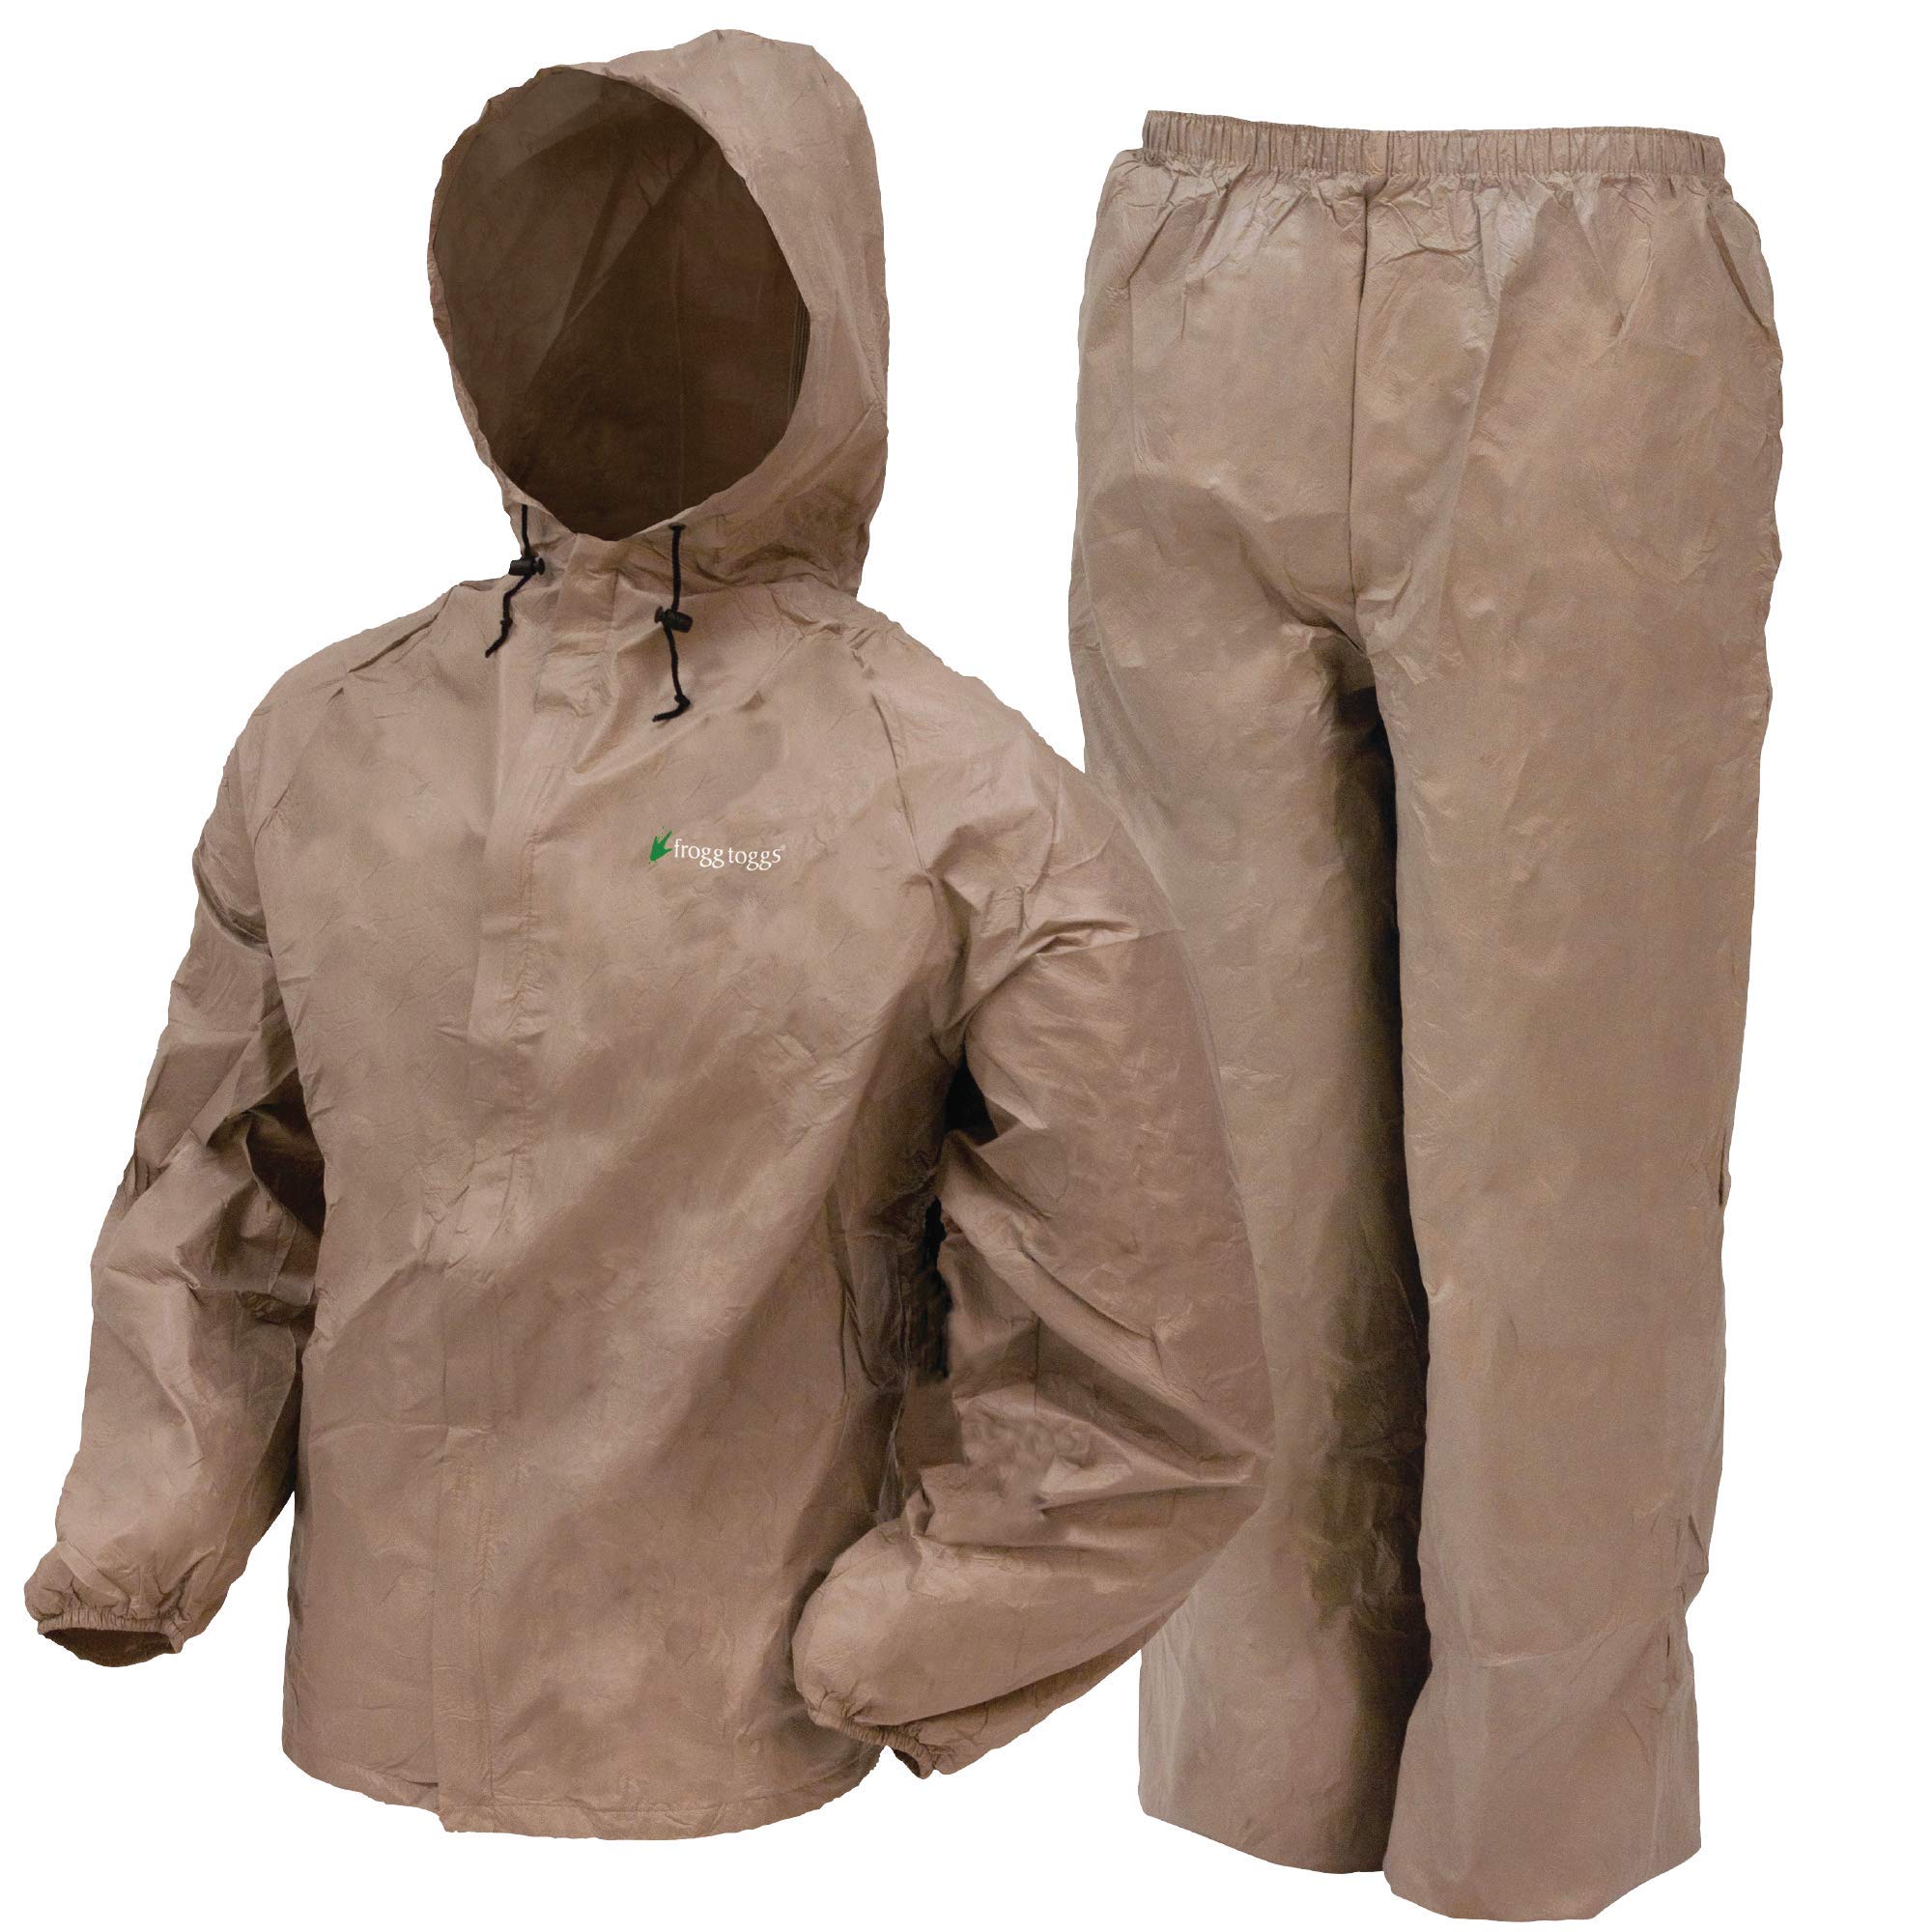 FROGG TOGGS Men's Ultra-Lite2 Waterproof Breathable Rain Suit